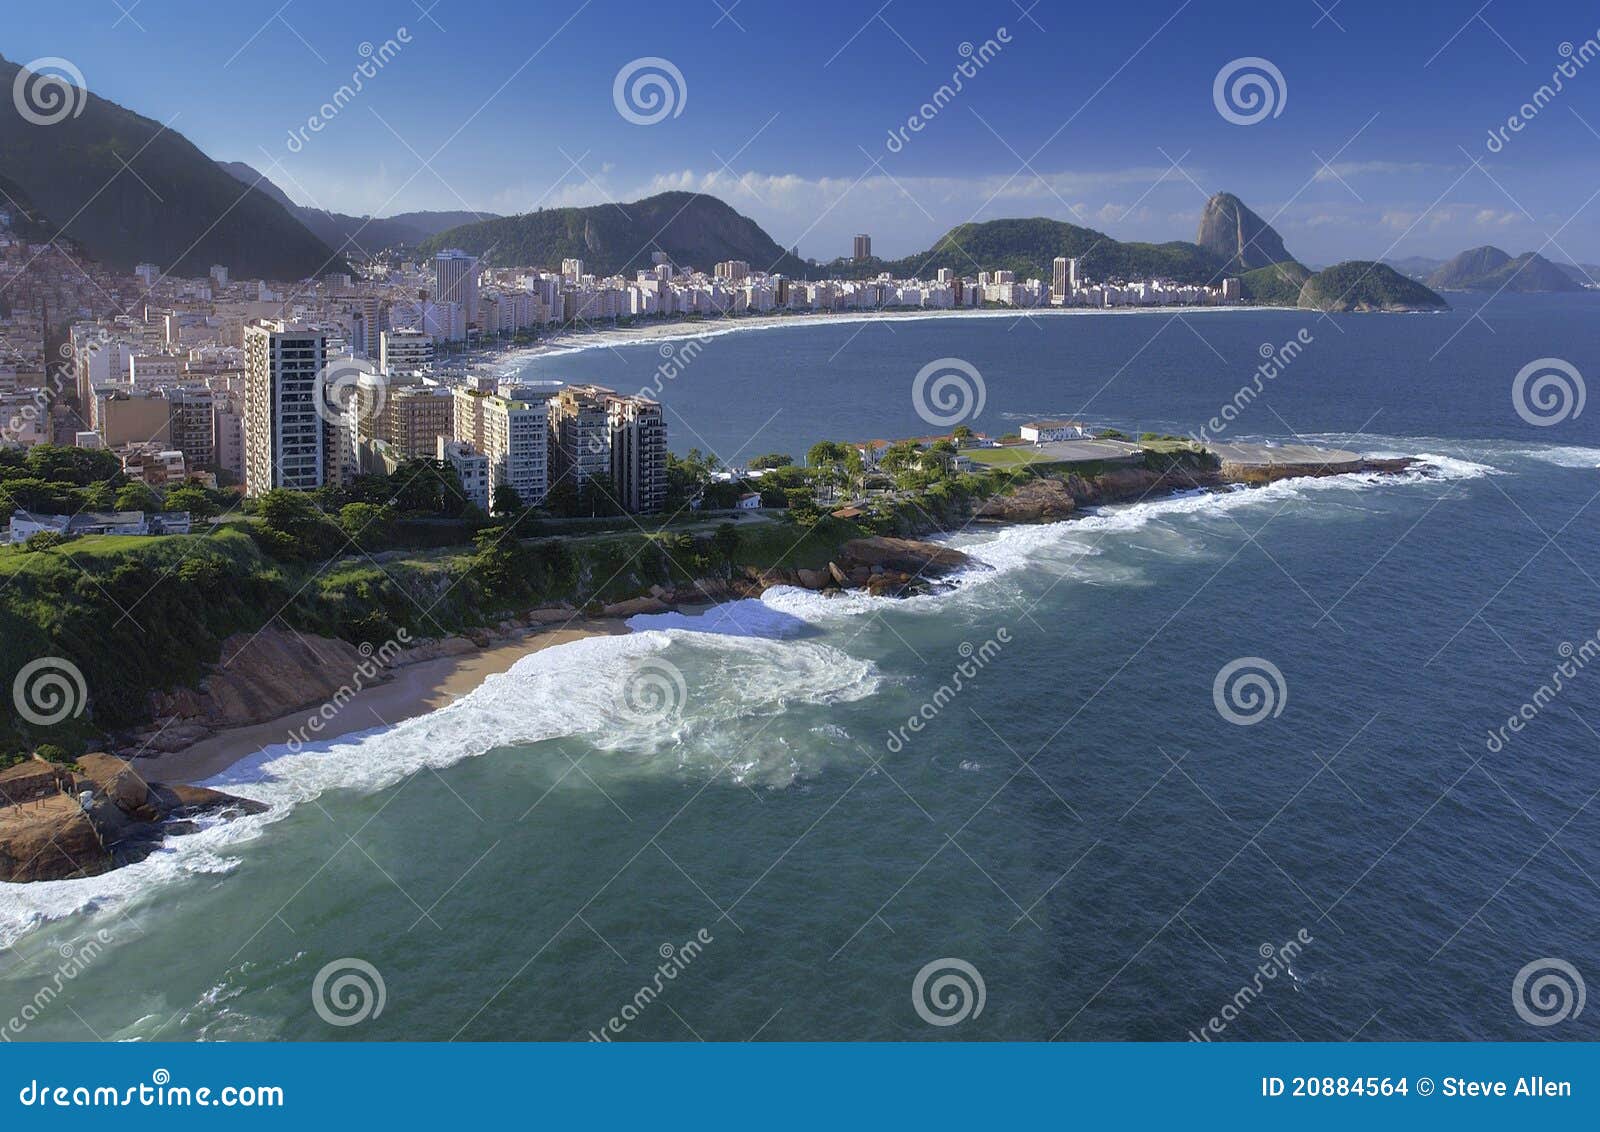 rio de janeiro - copacabana beach - brazil